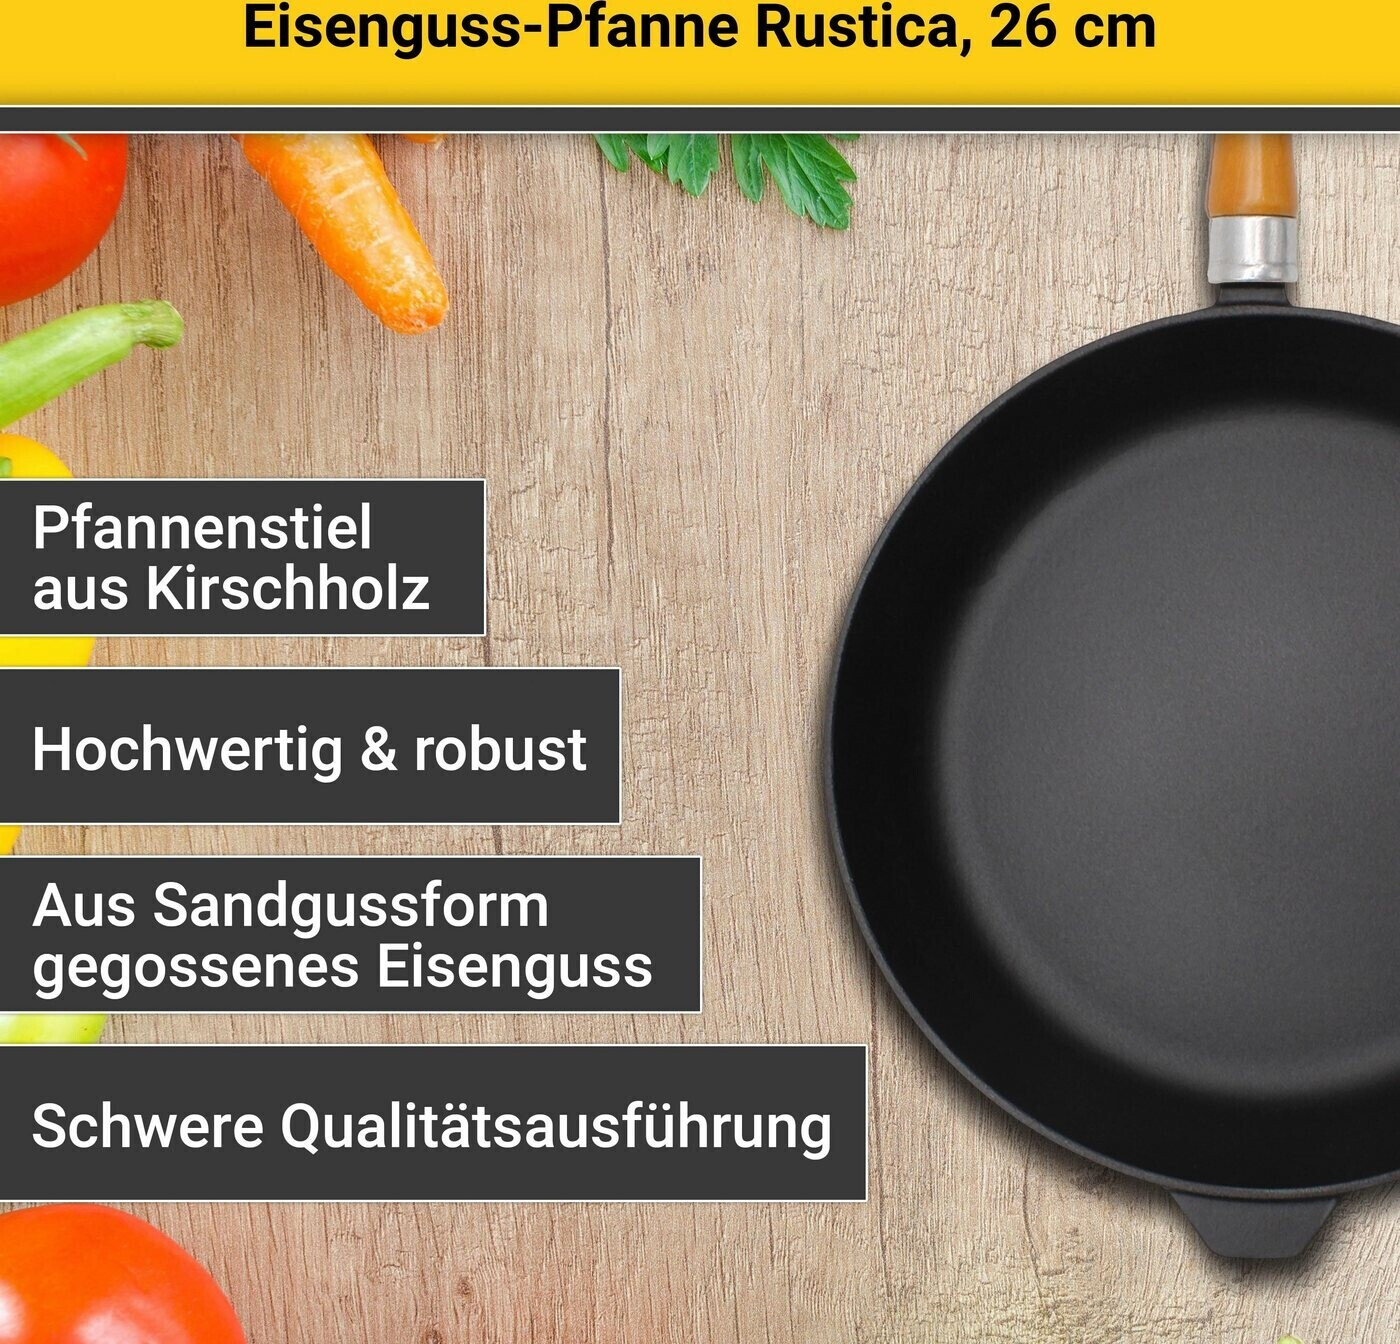 ab Eisenguss-Pfanne 42,99 28 cm Rustica € bei | Krüger Preisvergleich